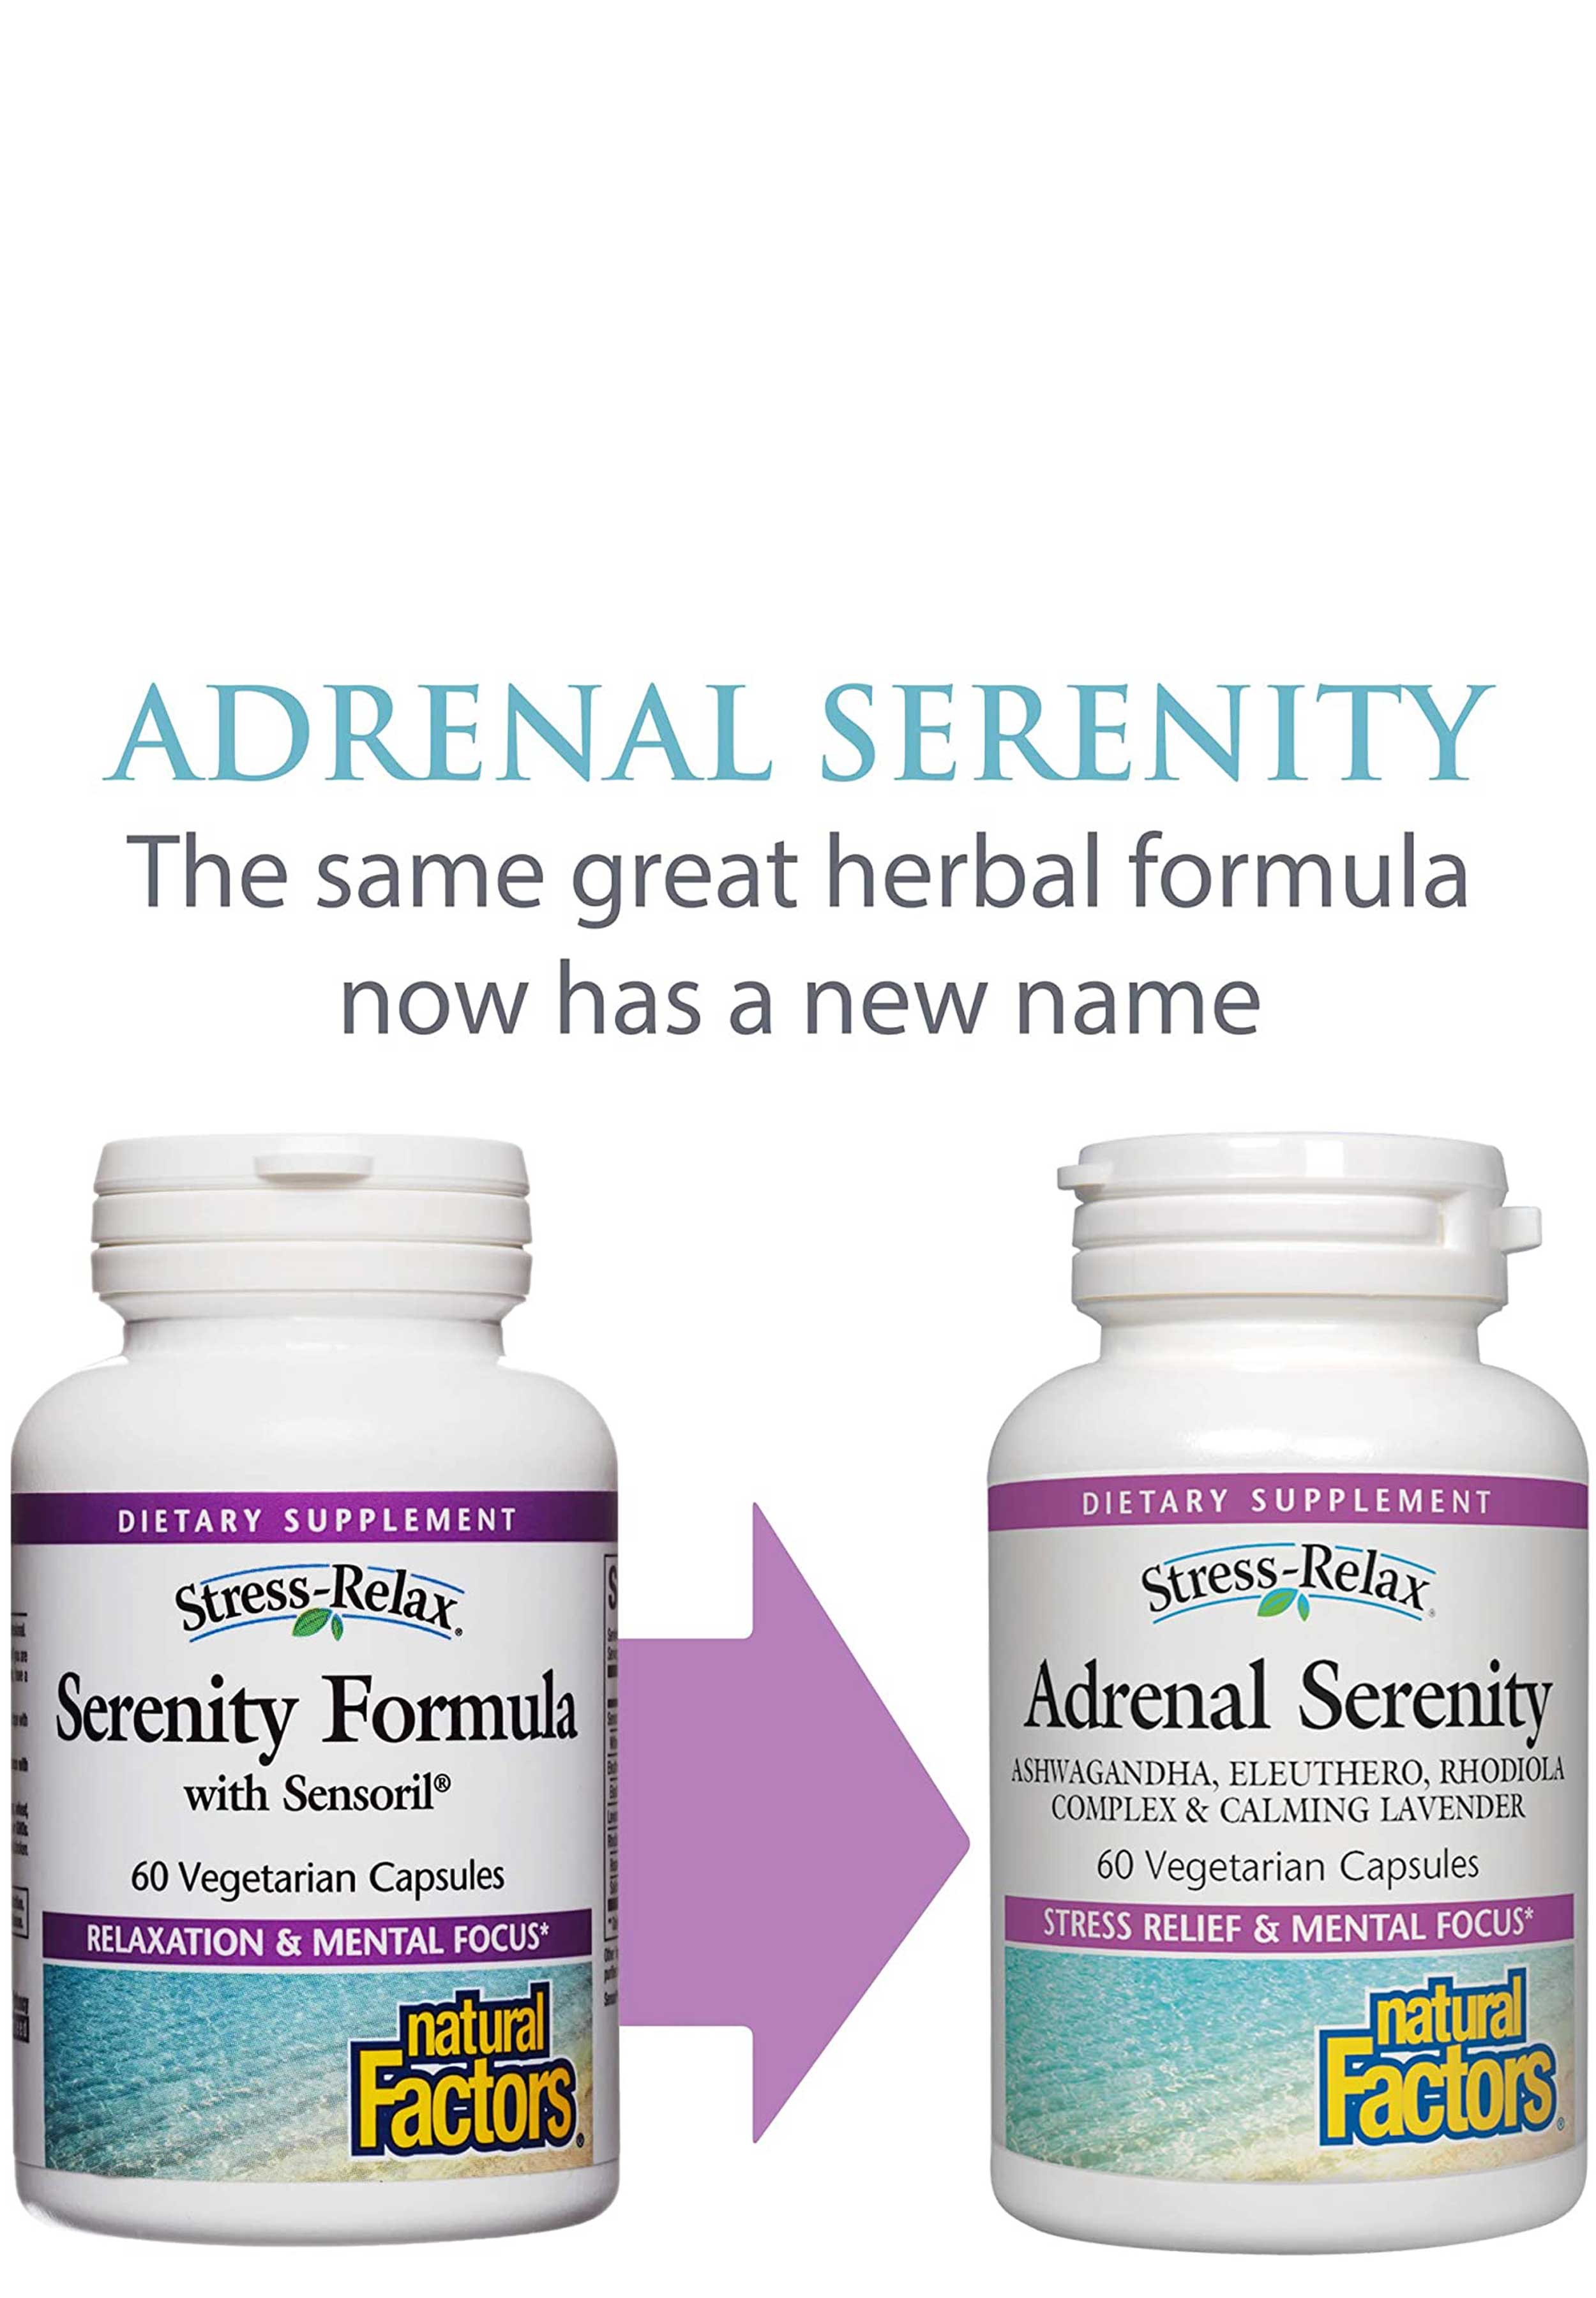 Natural Factors Stress-Relax Adrenal Serenity (formerly Stress-Relax Serenity Formula)